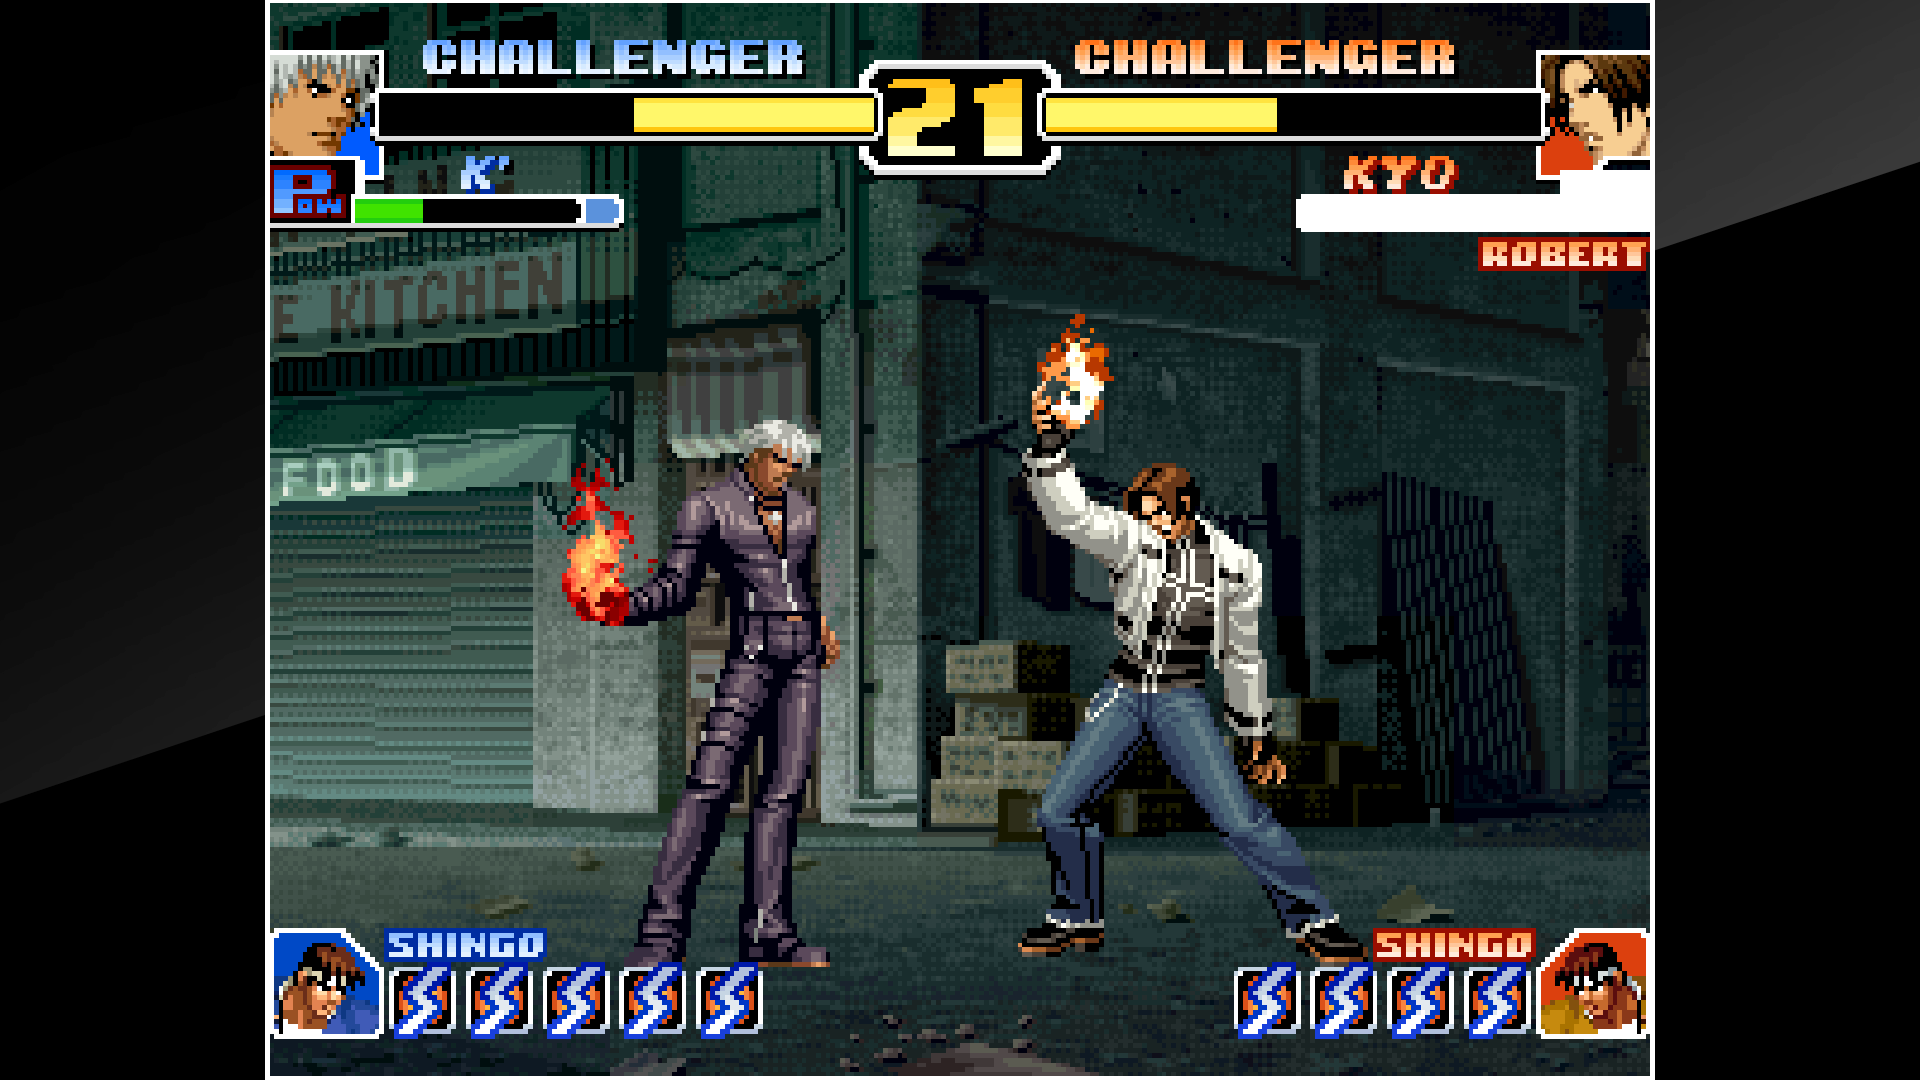 SNK Cart - The King of Fighter 99 MVS Original Arcade Video Game